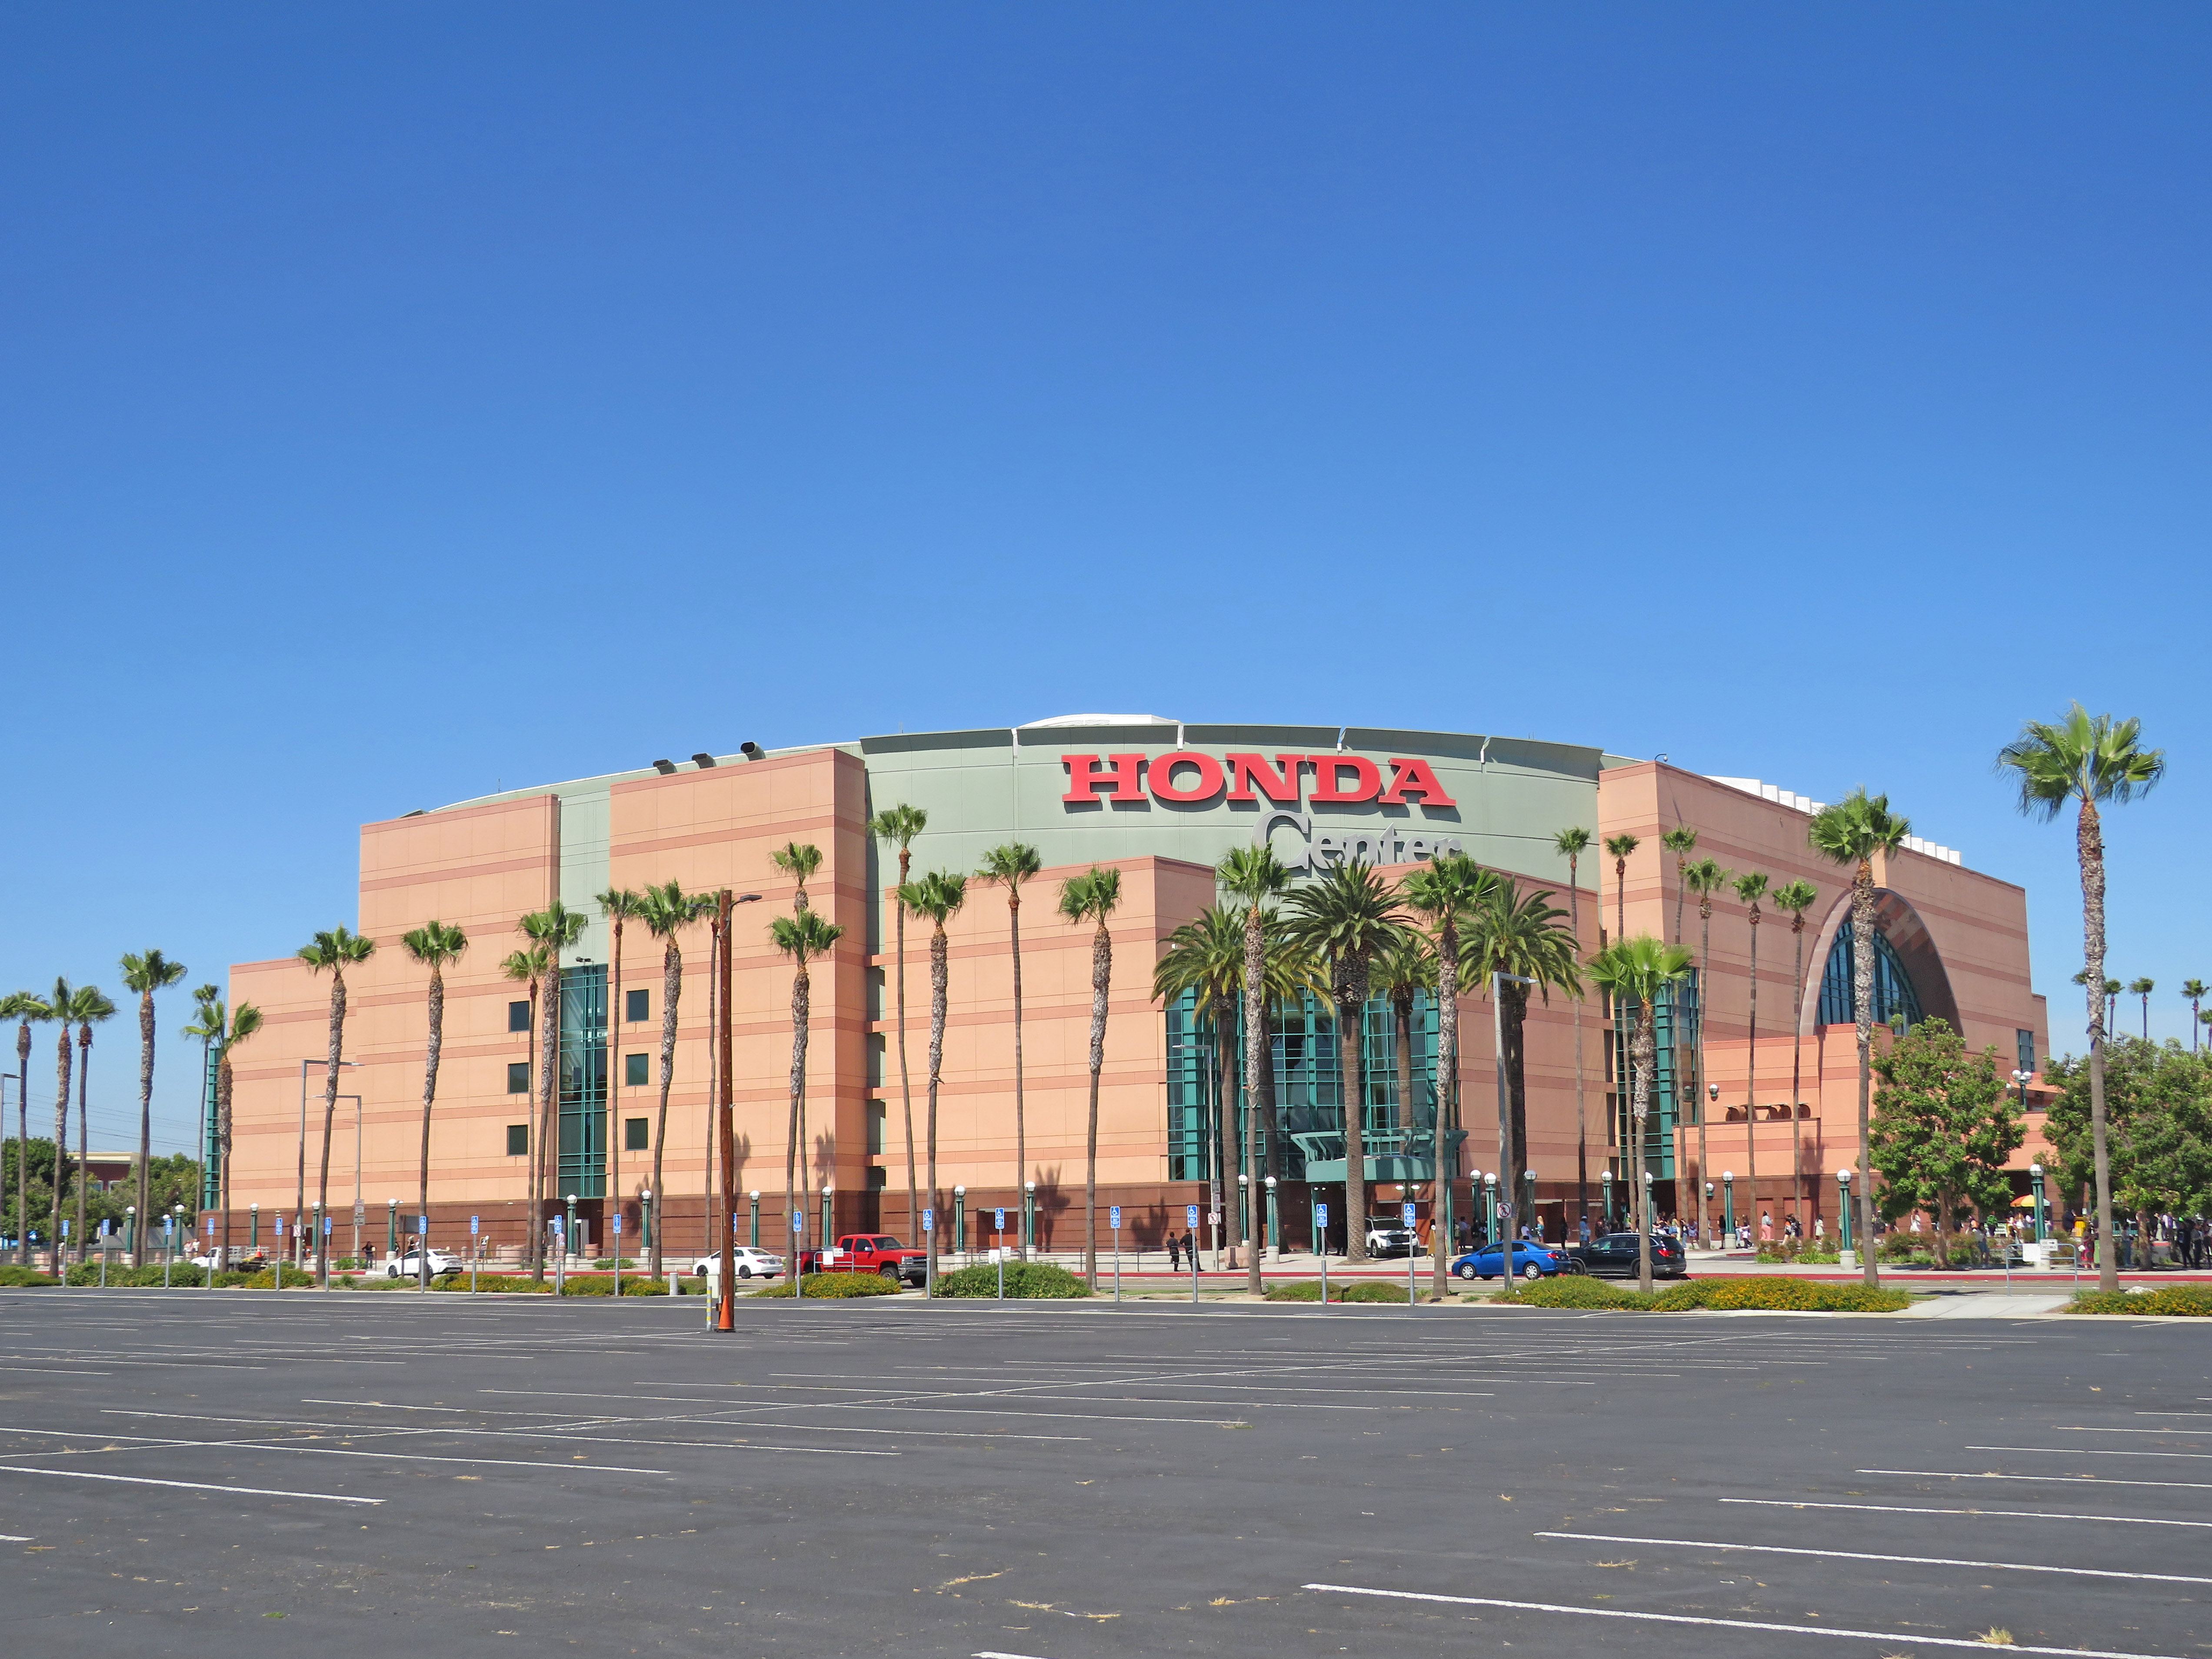 Honda Center, home of the Anaheim Ducks, in scenic Orange County, California.